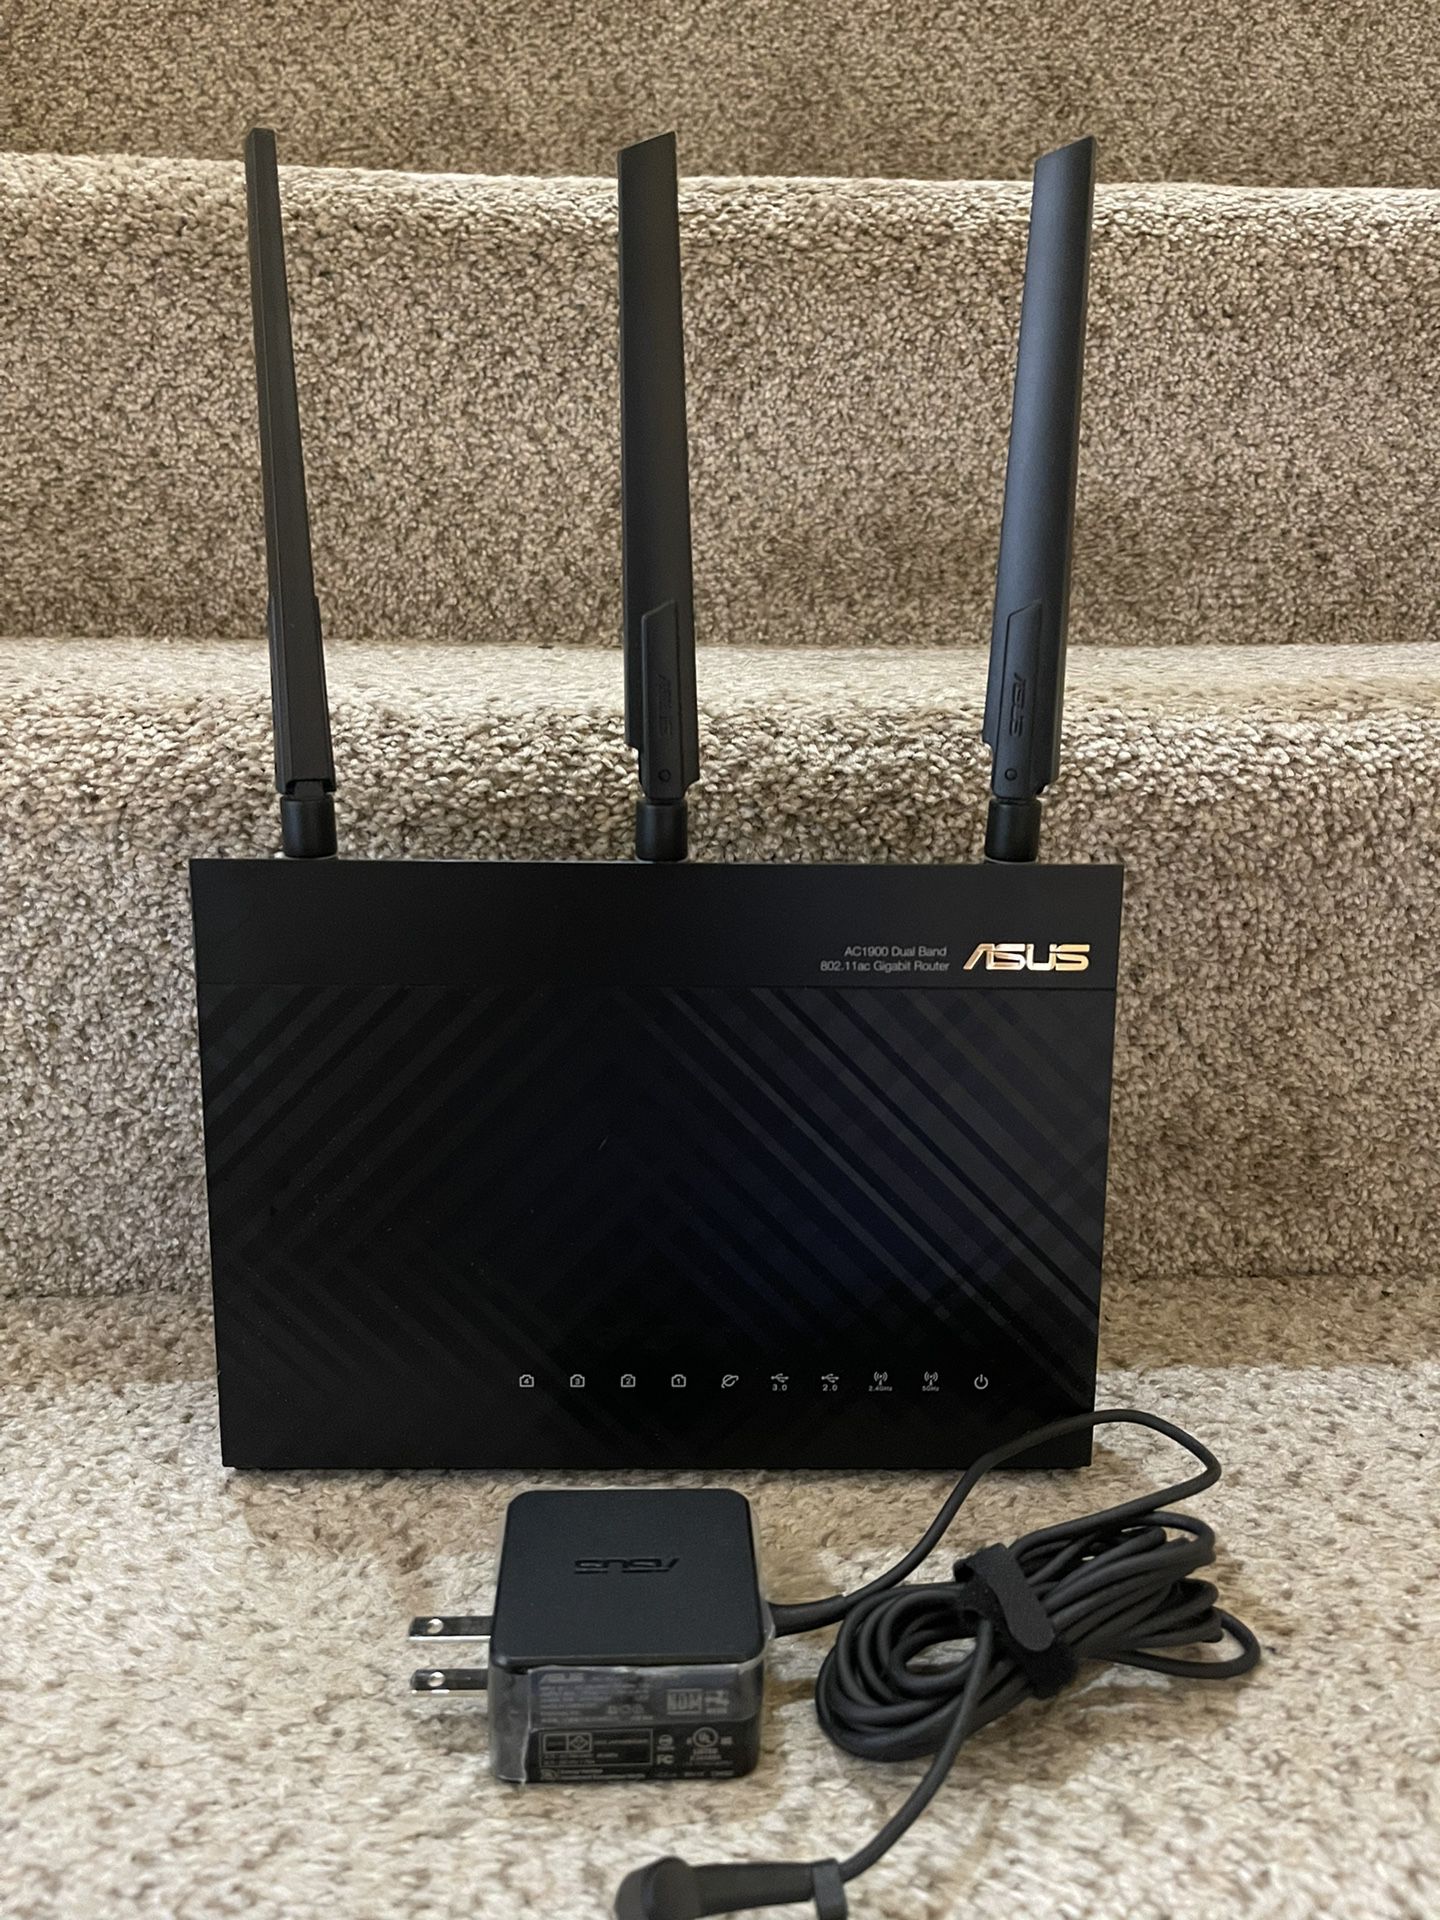 ASUS RT-AC68P Dual-band Gigabit Router